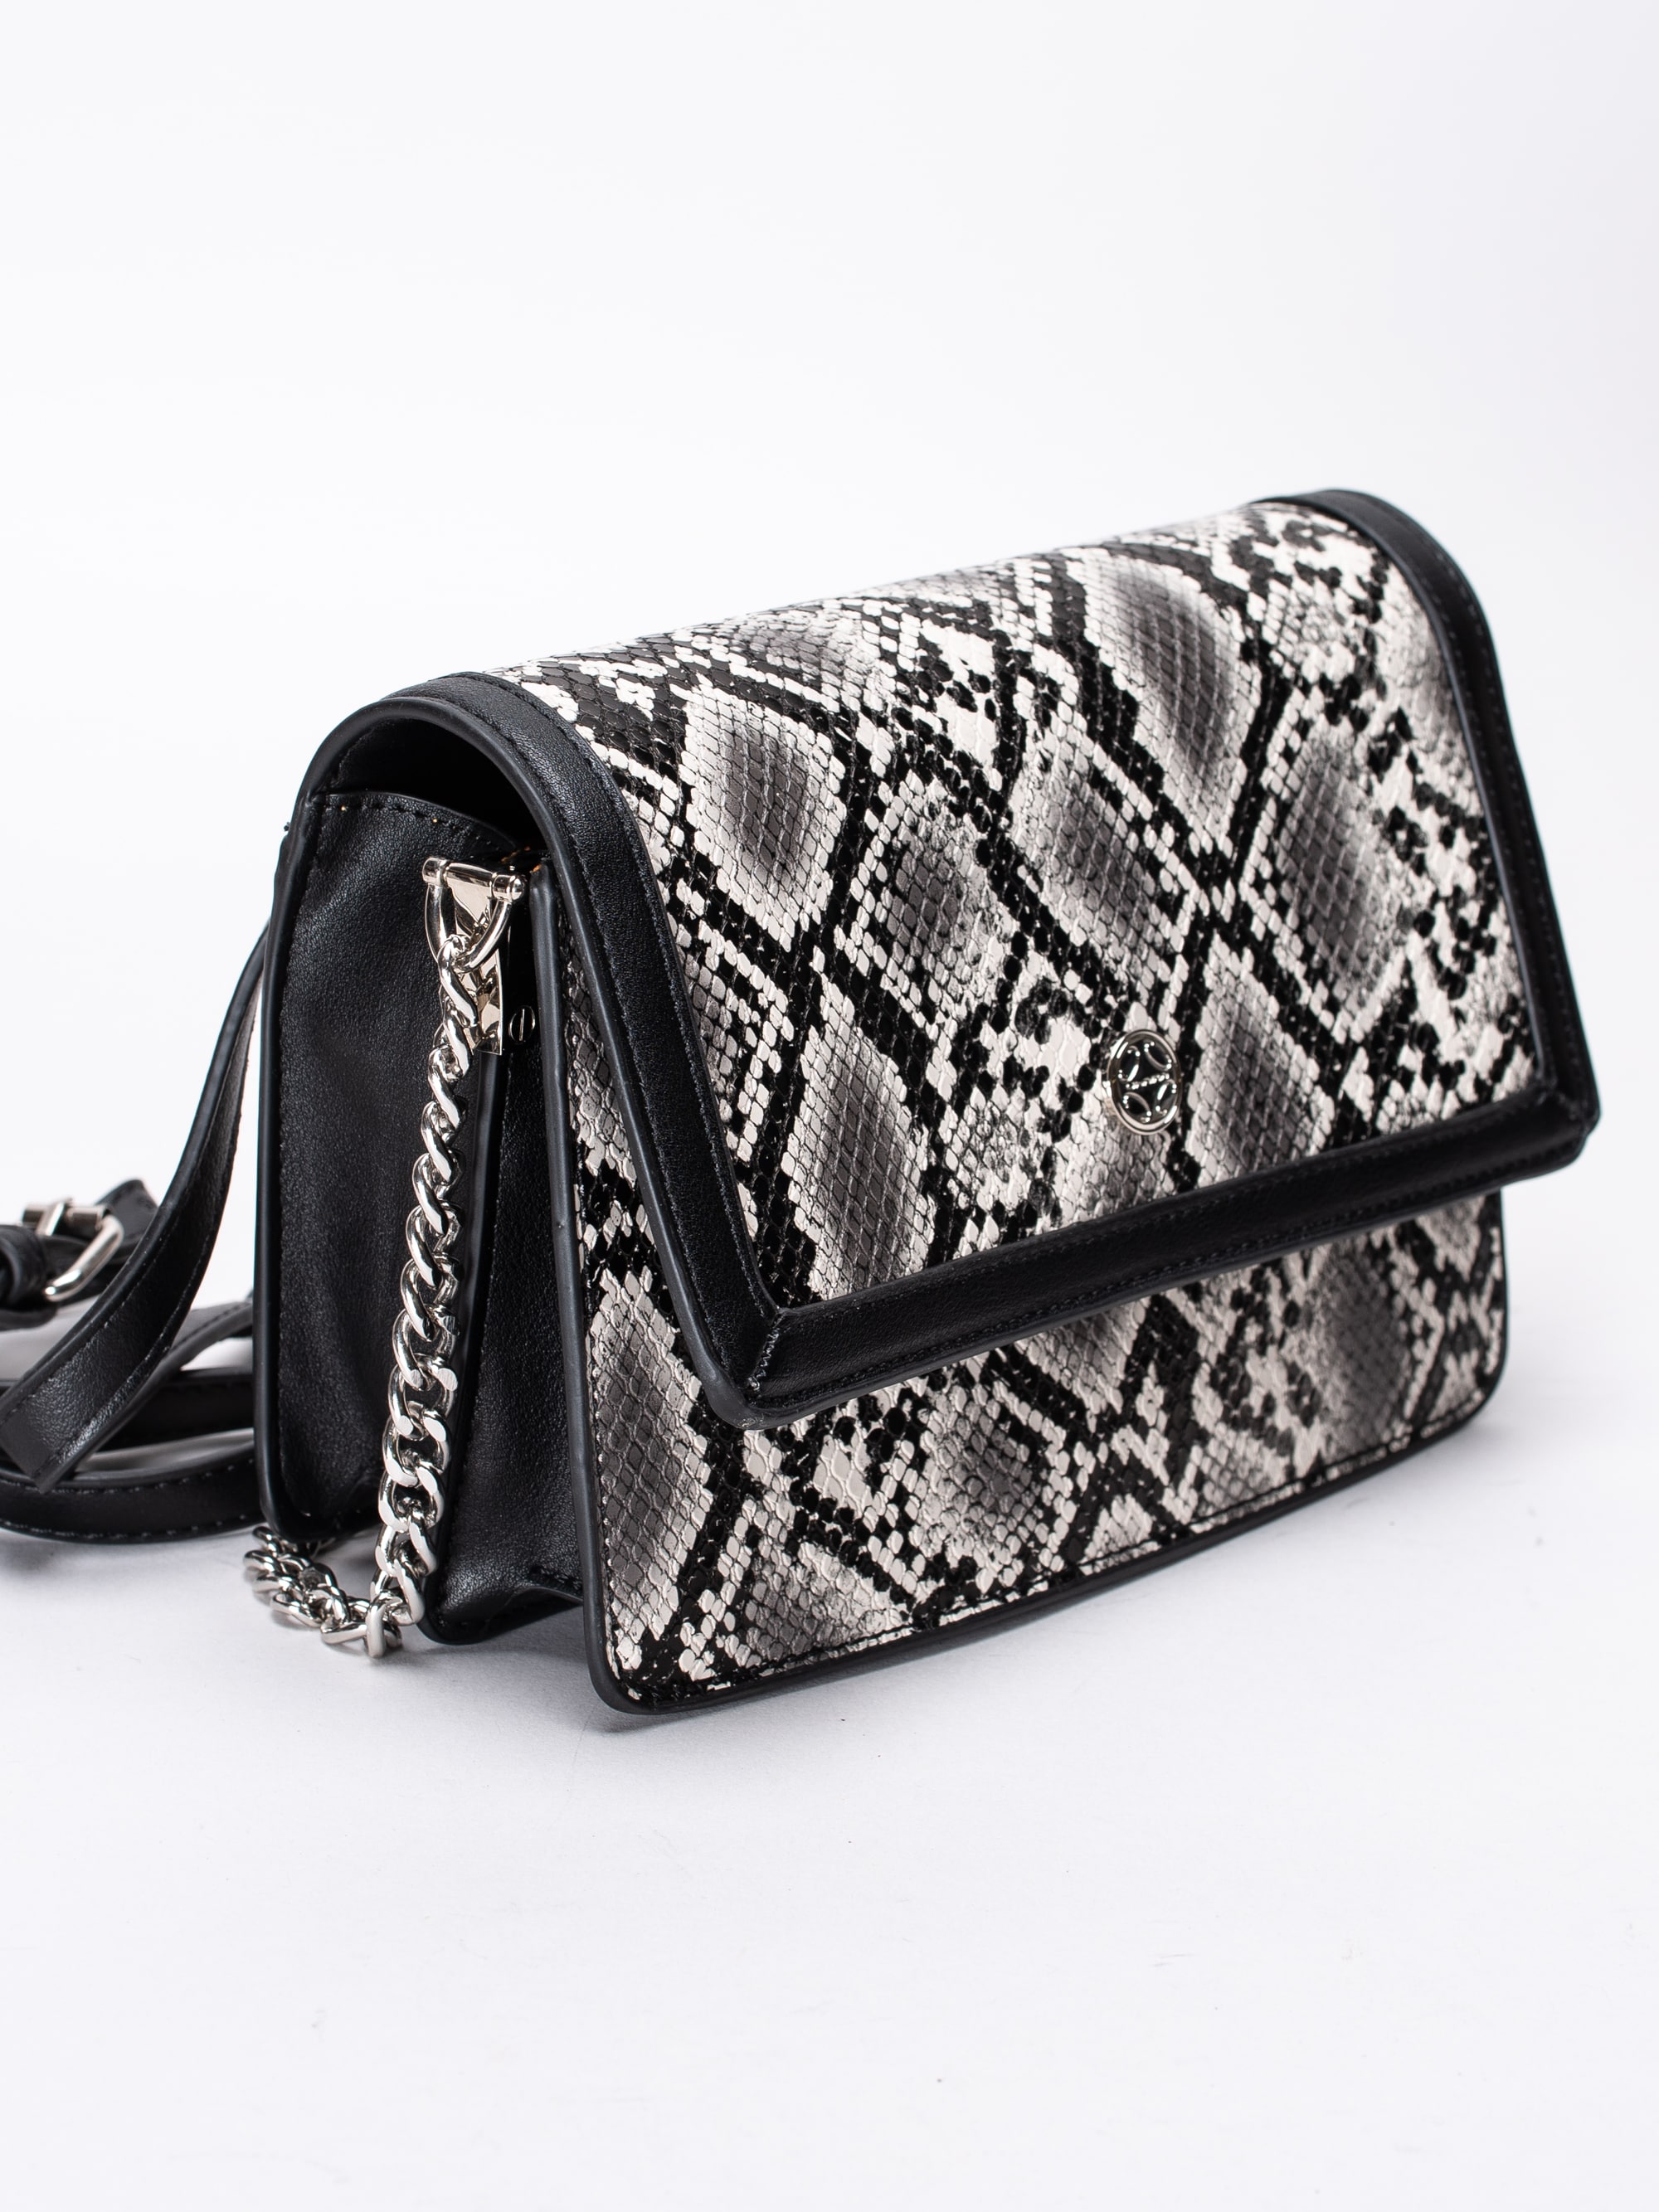 86193011 Ulrika Design 36-5271-1 Animal svart snake mönstrad flapbag med kedja-3